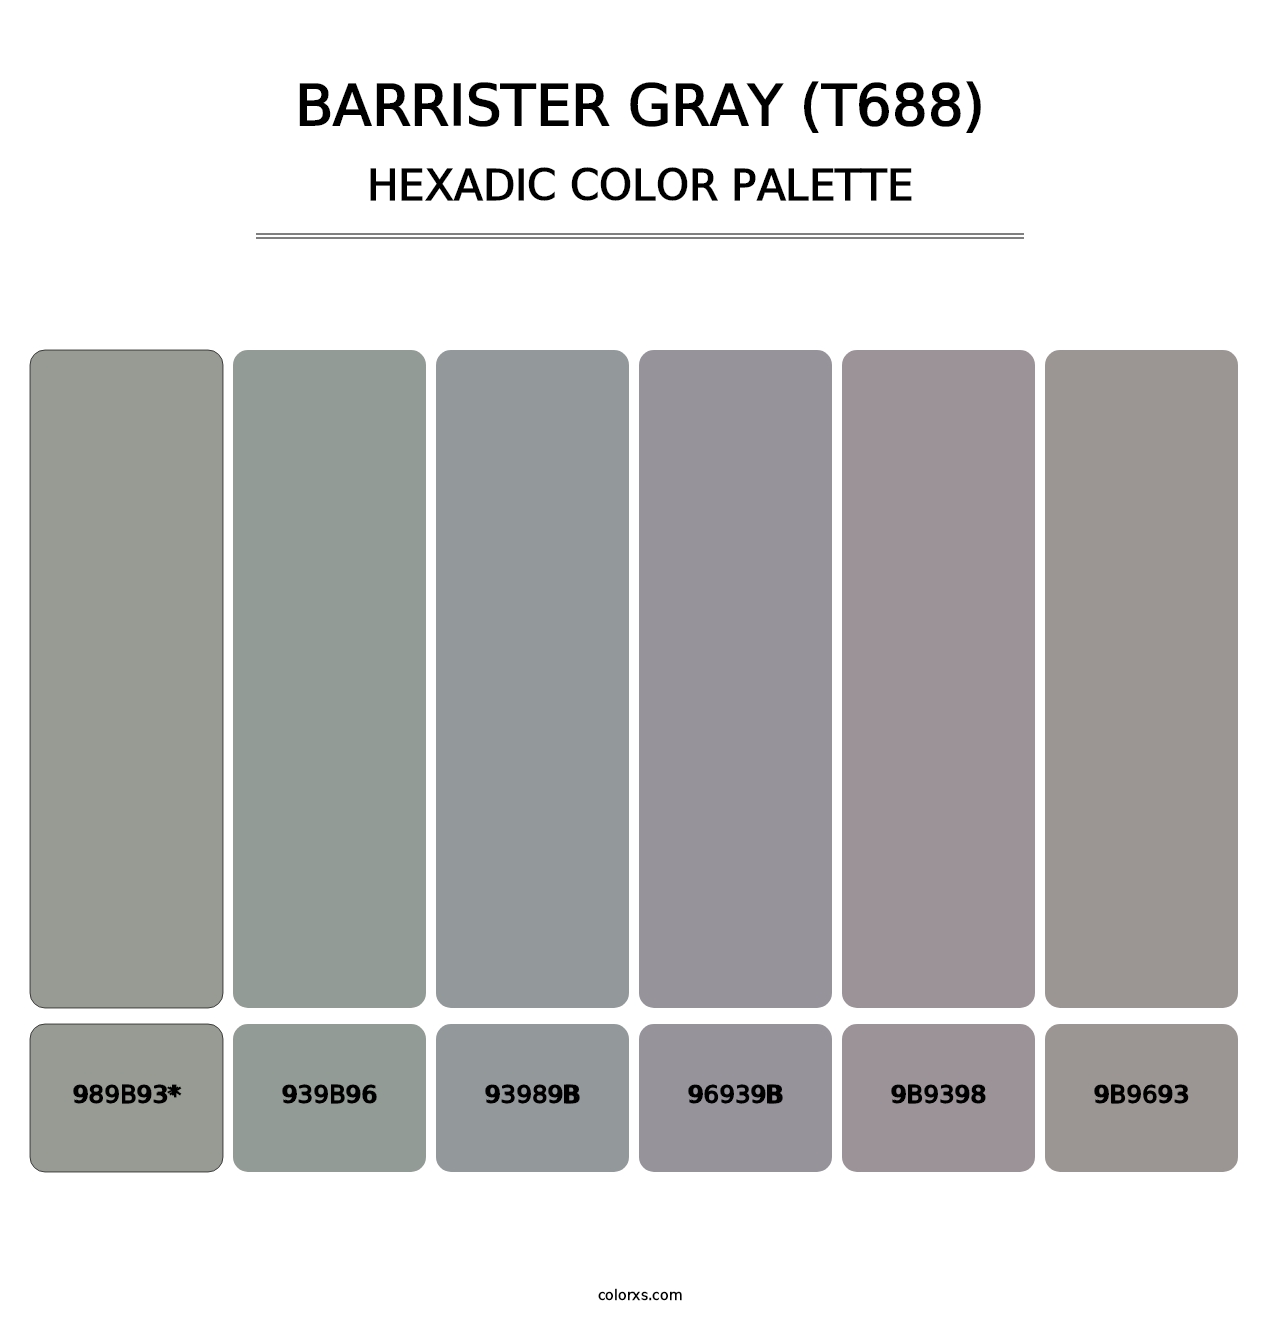 Barrister Gray (T688) - Hexadic Color Palette